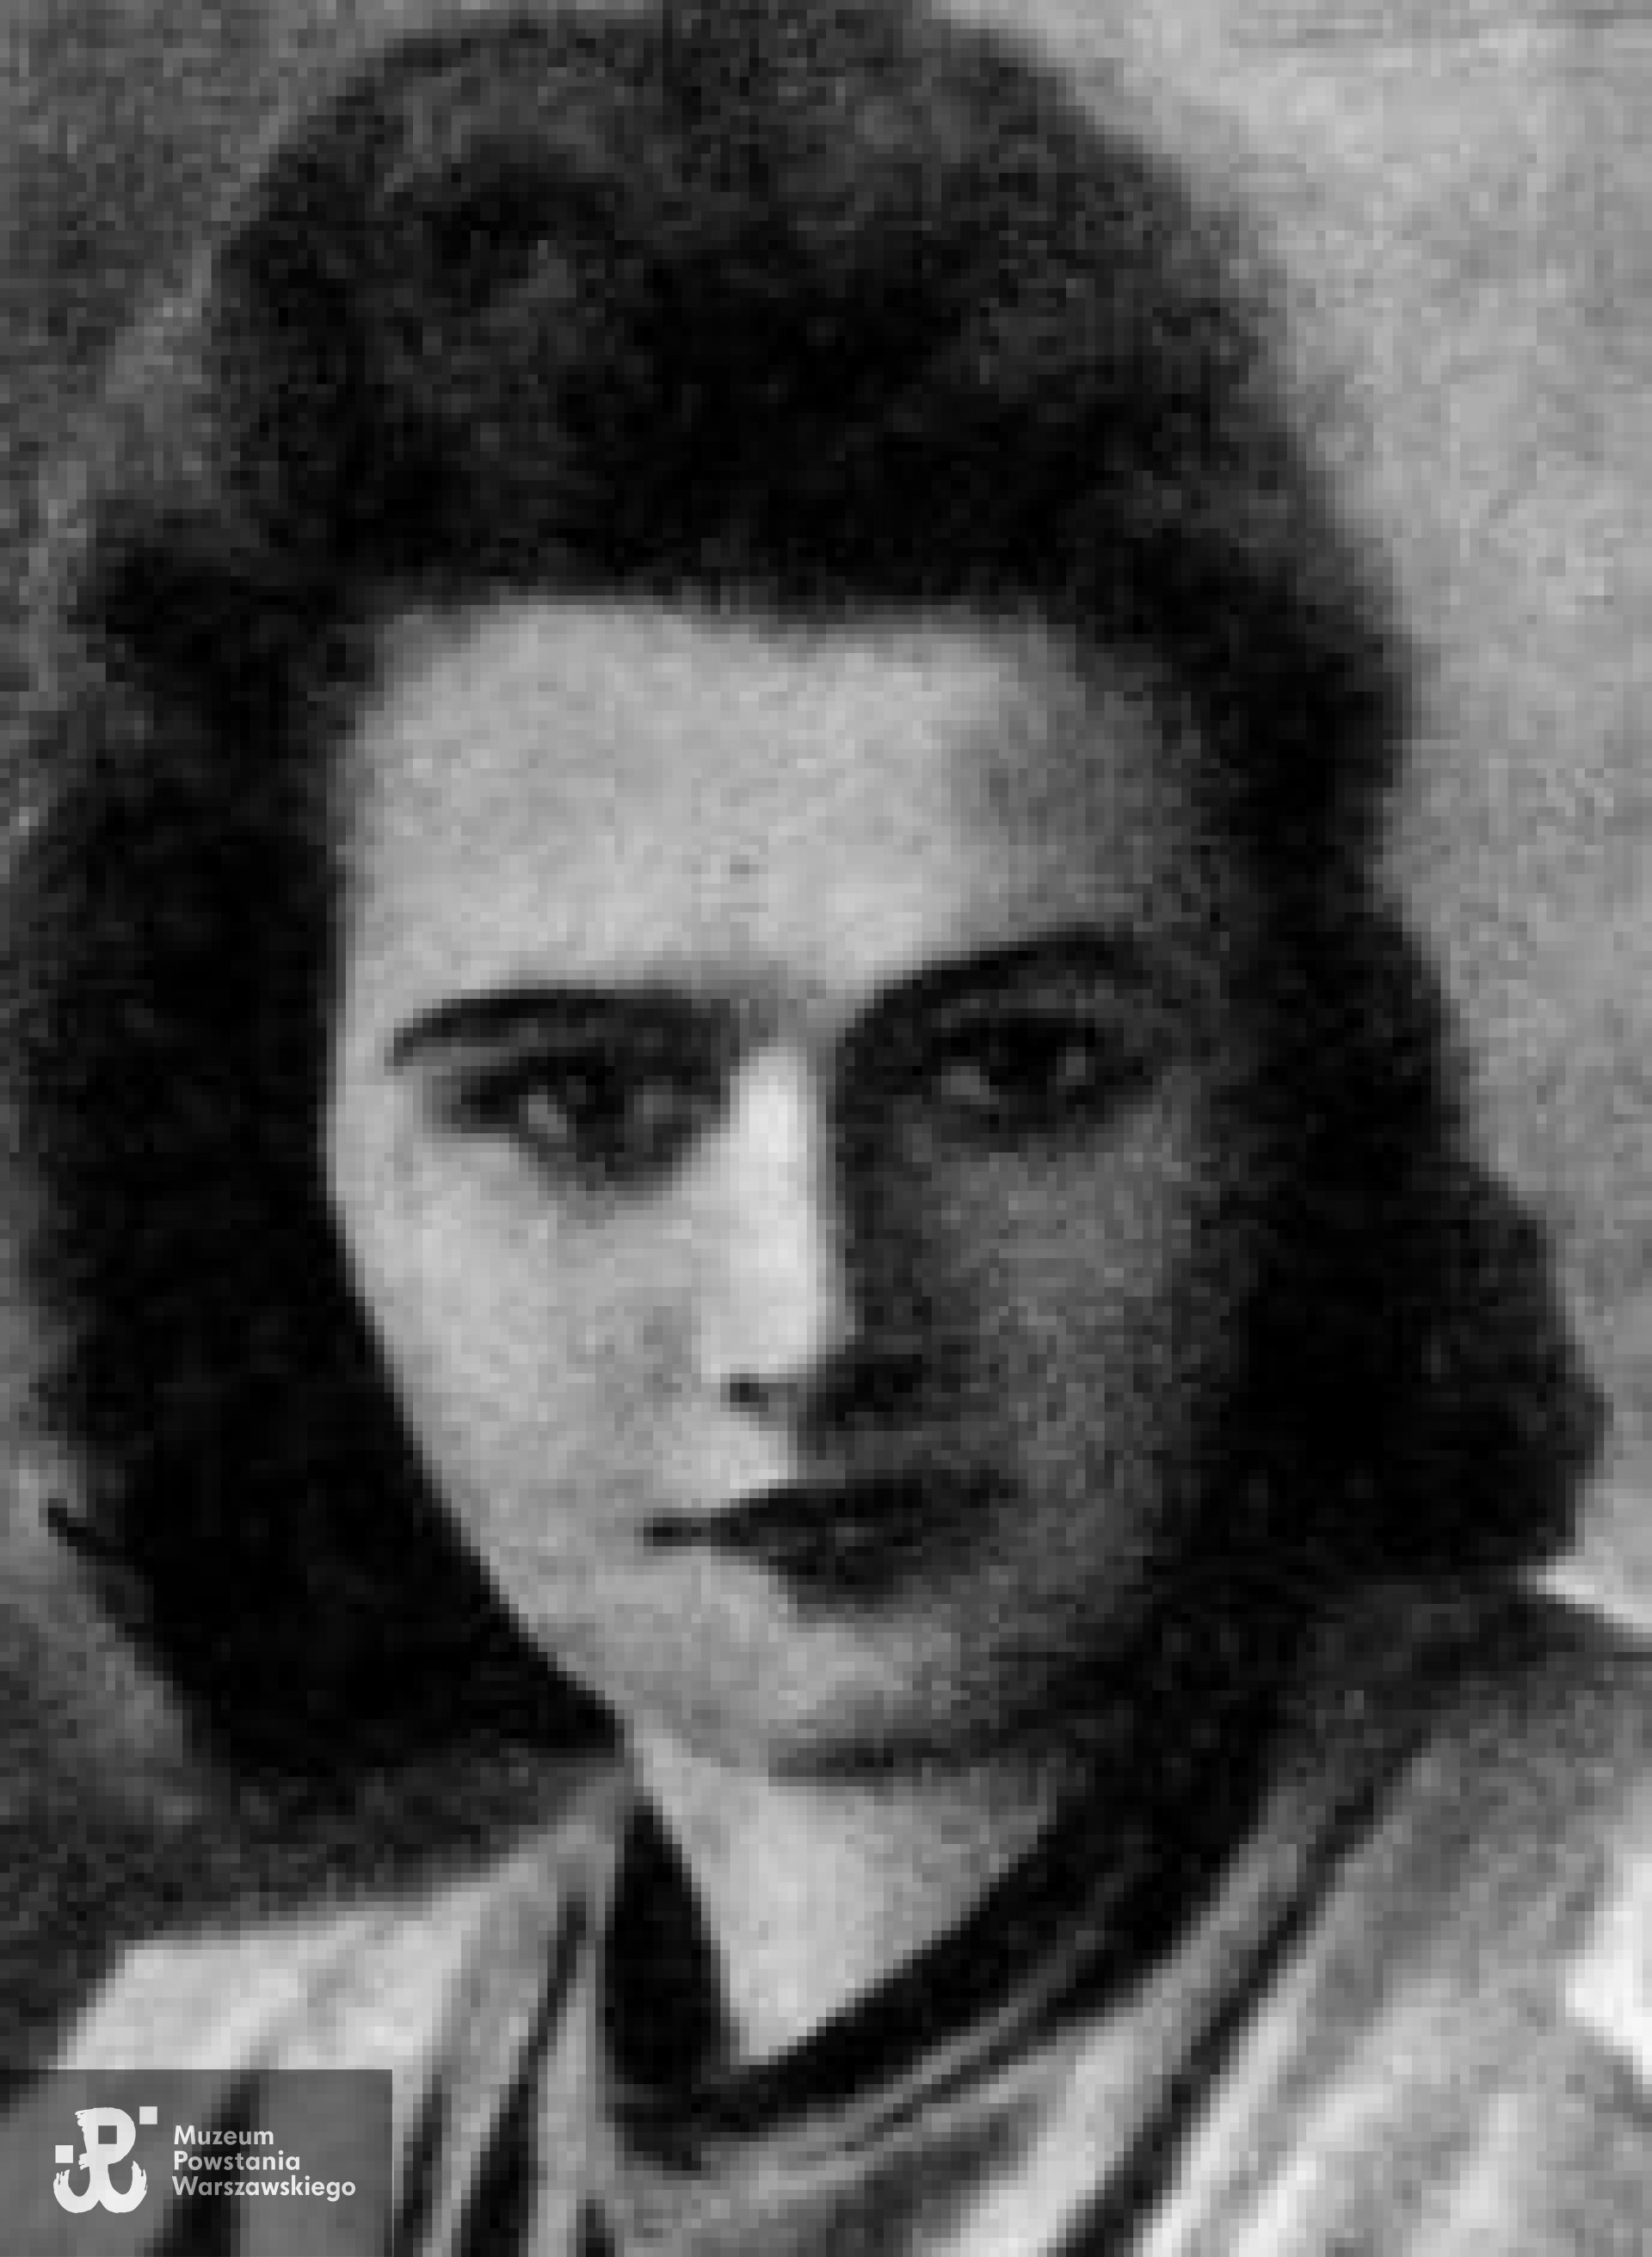 Halina Jędrysiak "Lidia" (1922-1944)